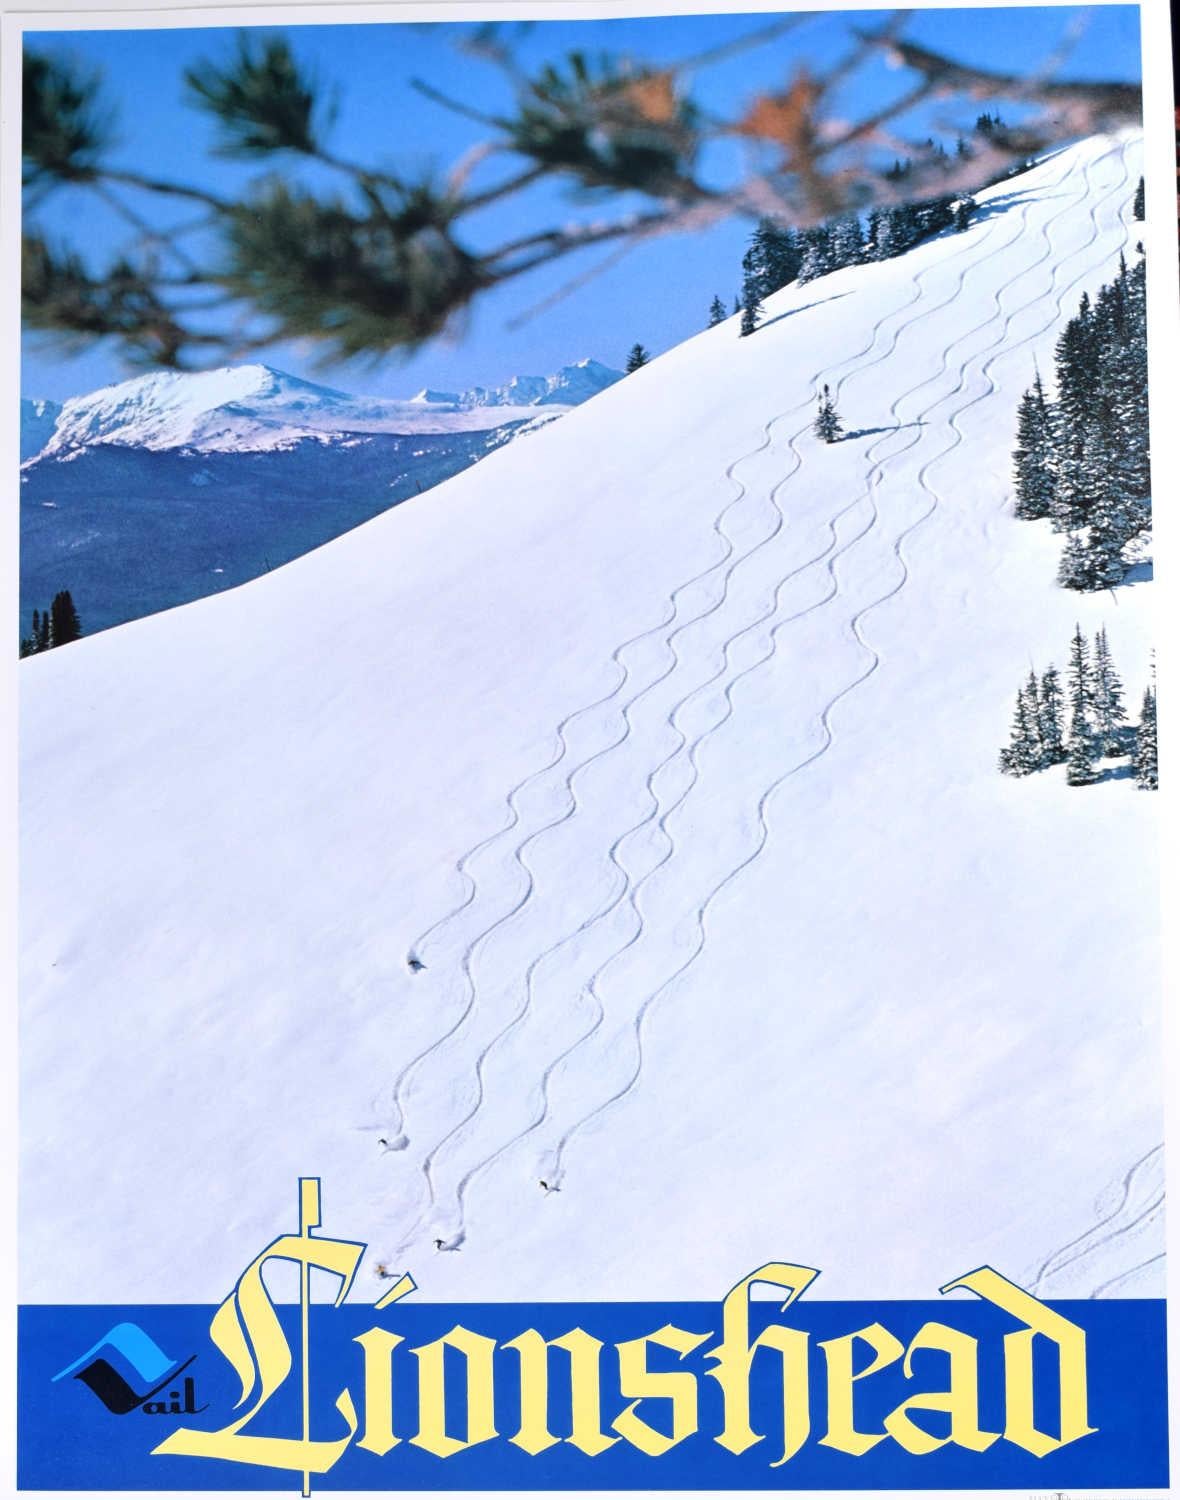 Unknown Landscape Print - Lionshead, Vail, Colorado Vintage Ski Poster USA (c.1970) Powder Day